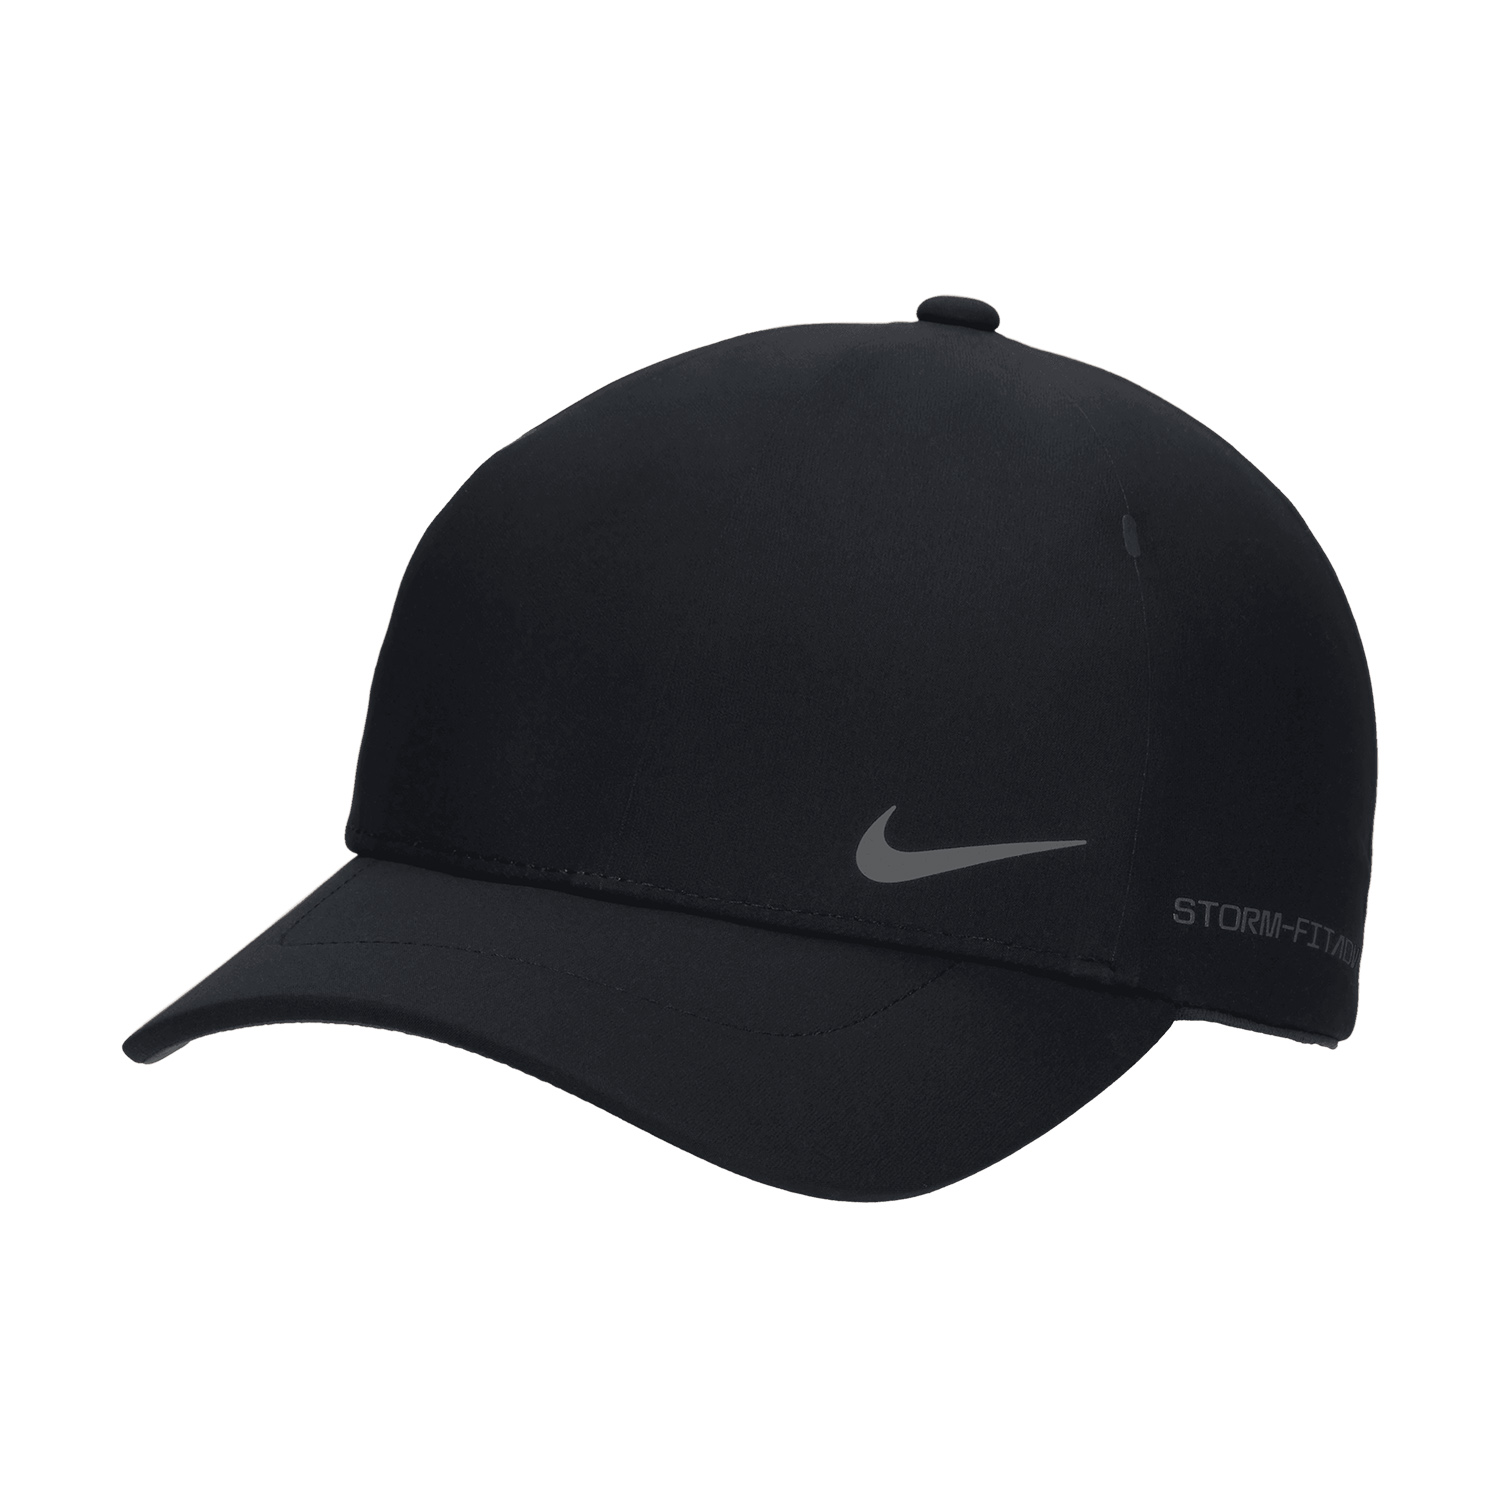 Nike Storm-FIT ADV Club Running Cap - Black/Reflective Silver